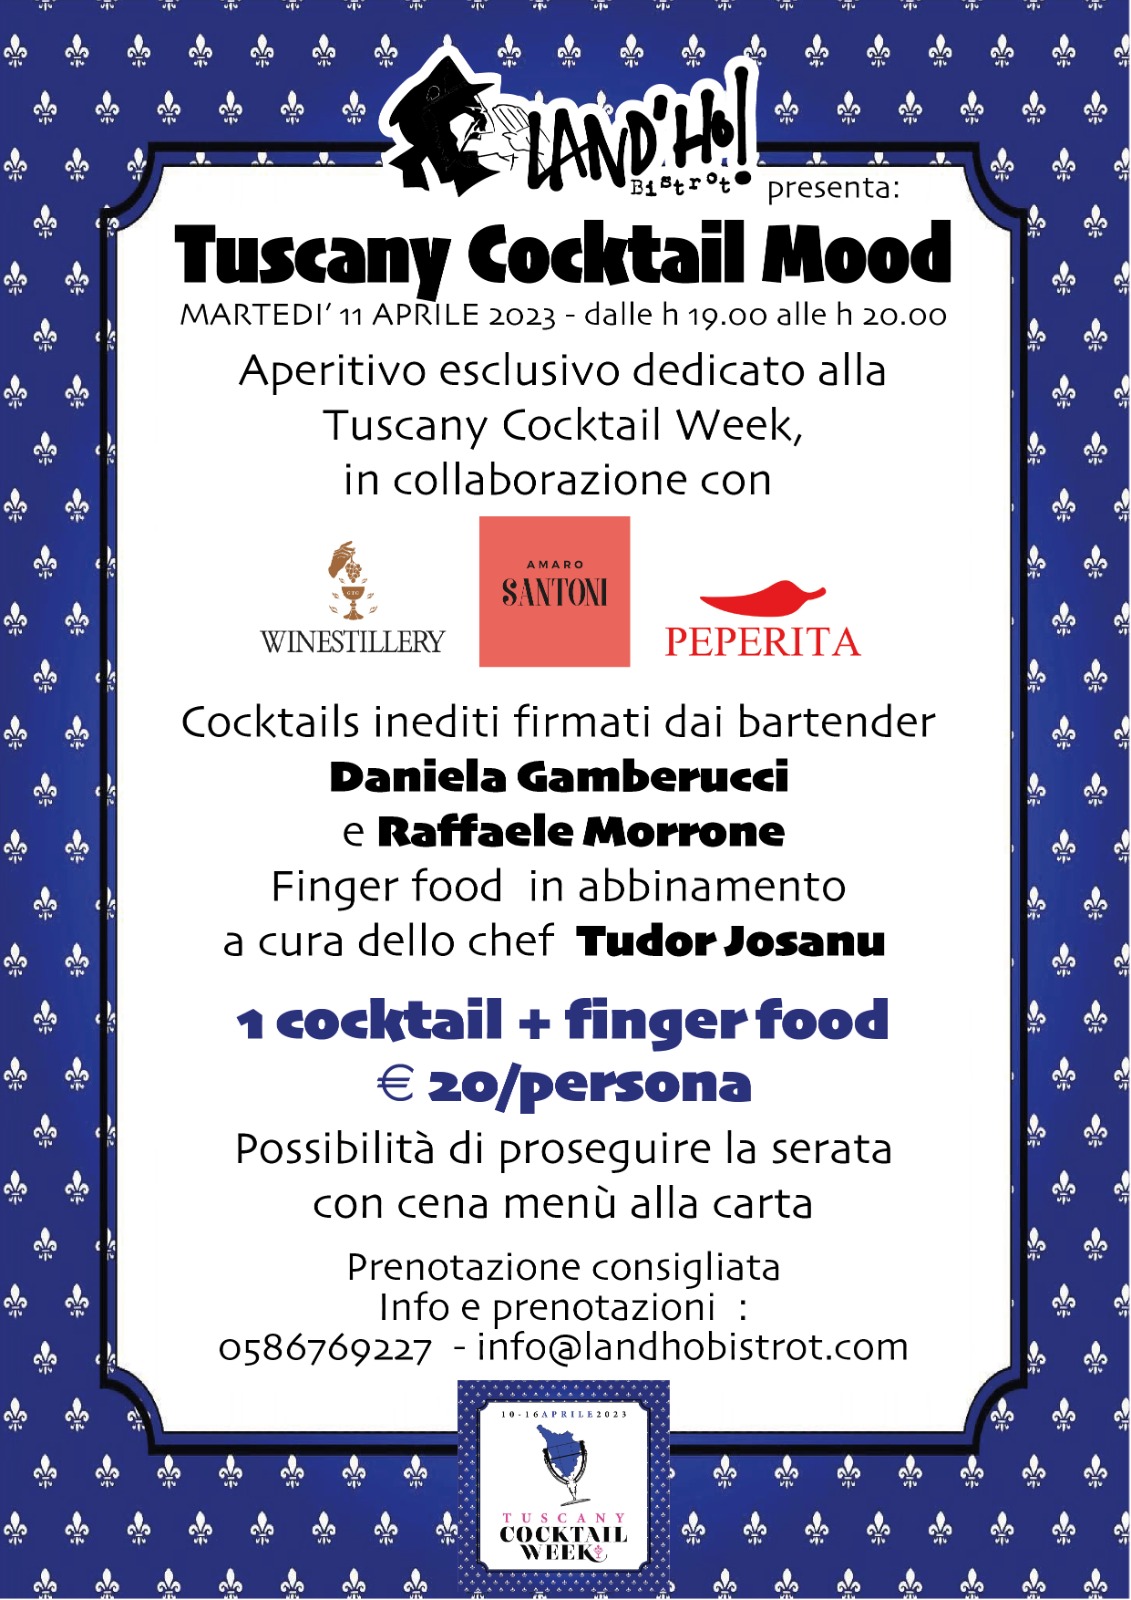 Tuscany Cocktail Mood